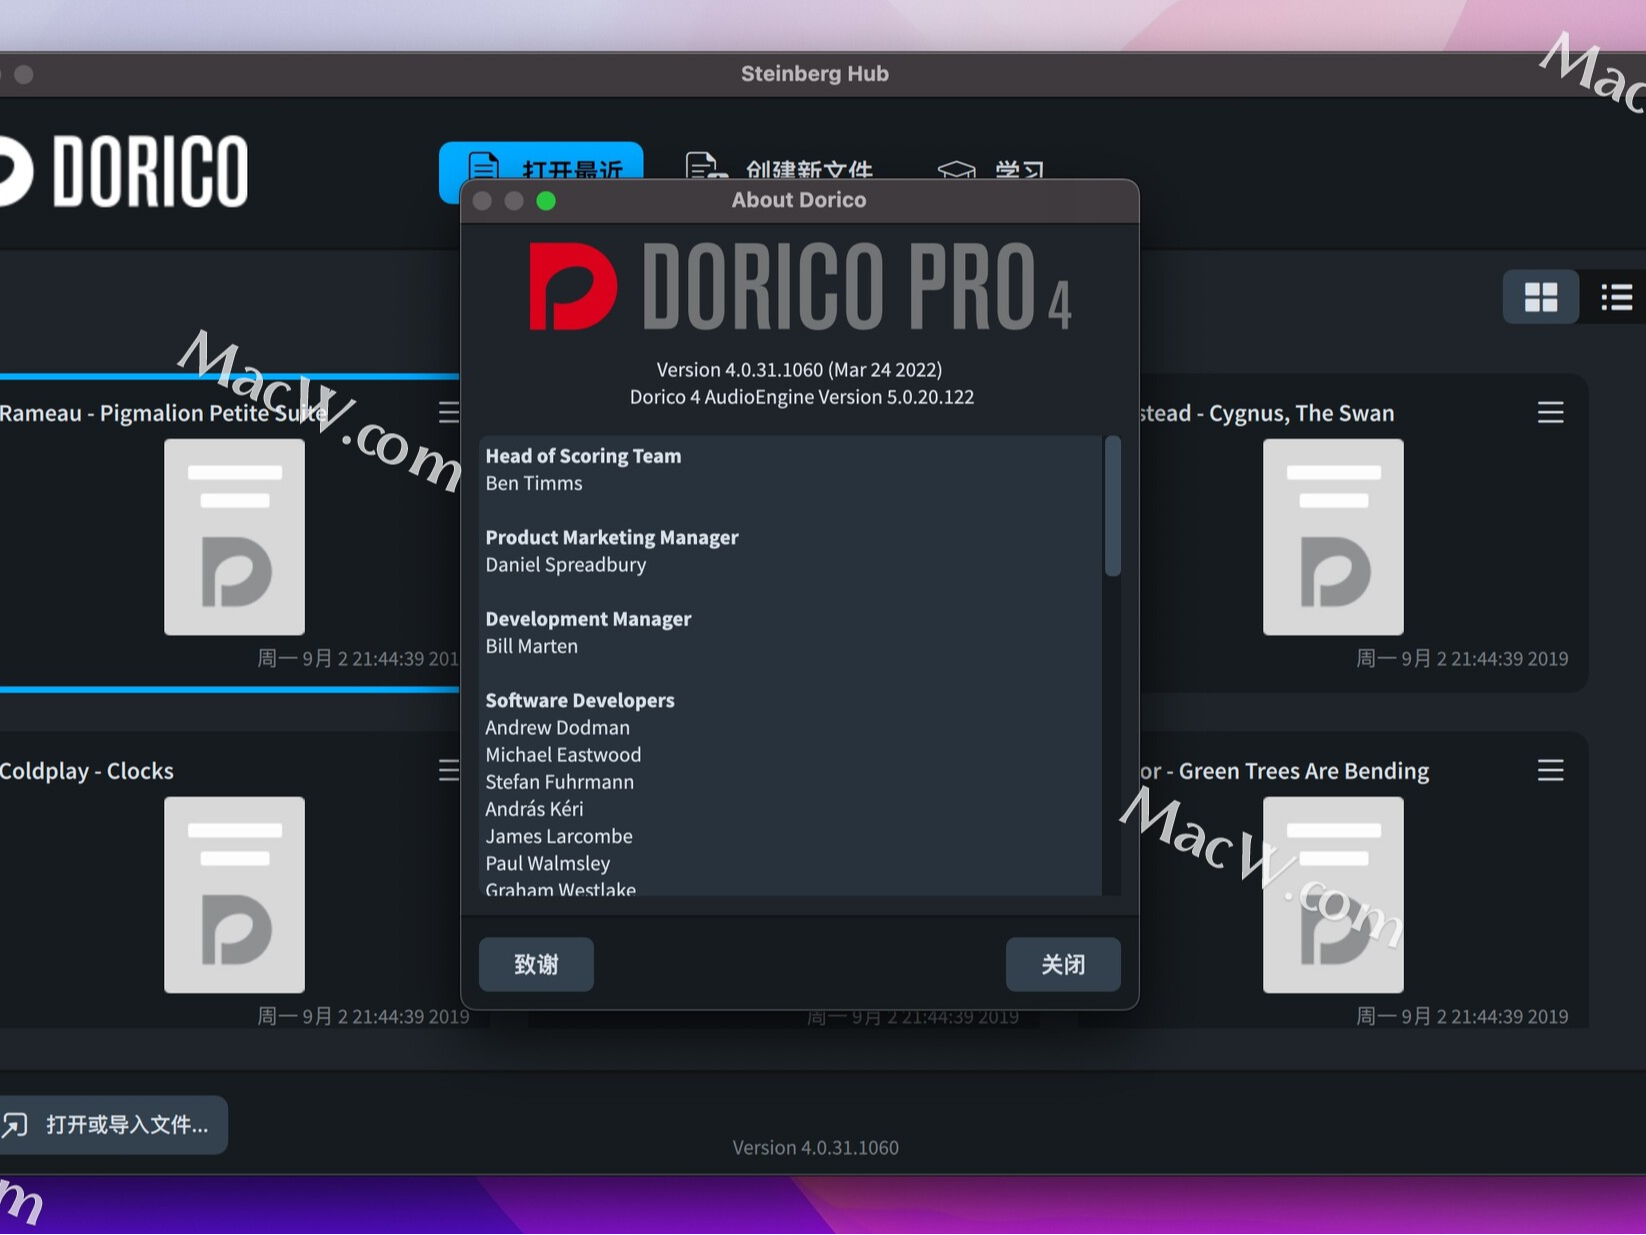 download the last version for apple Steinberg Dorico Pro 5.0.20